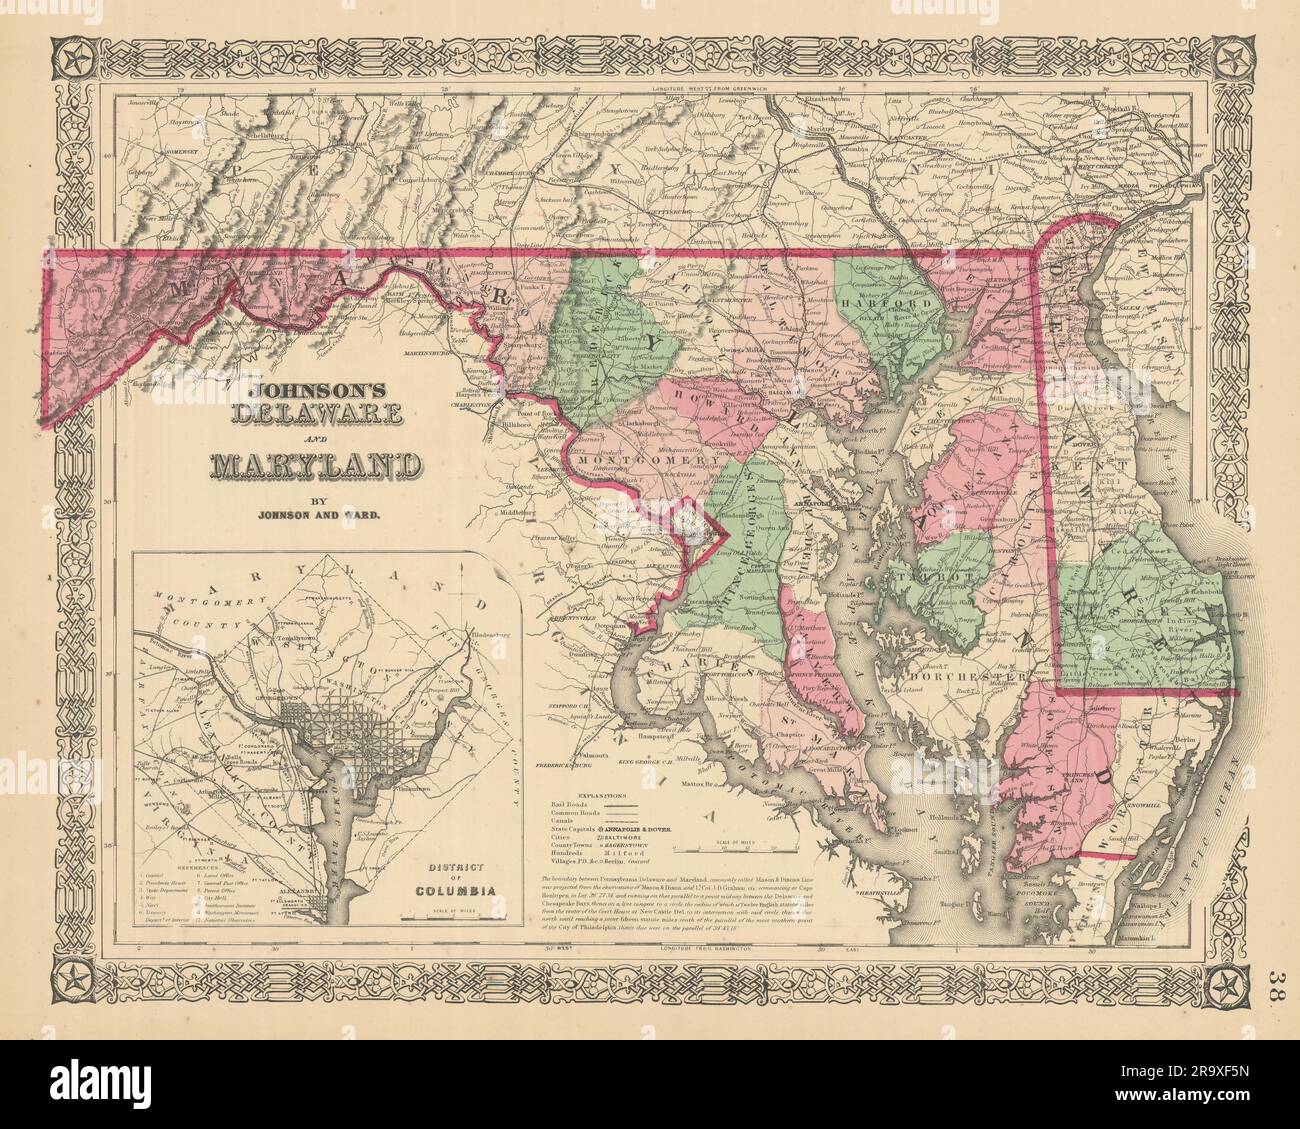 Johnson's Delaware, Maryland & District of Columbia. Counties 1866 alte Karte Stockfoto